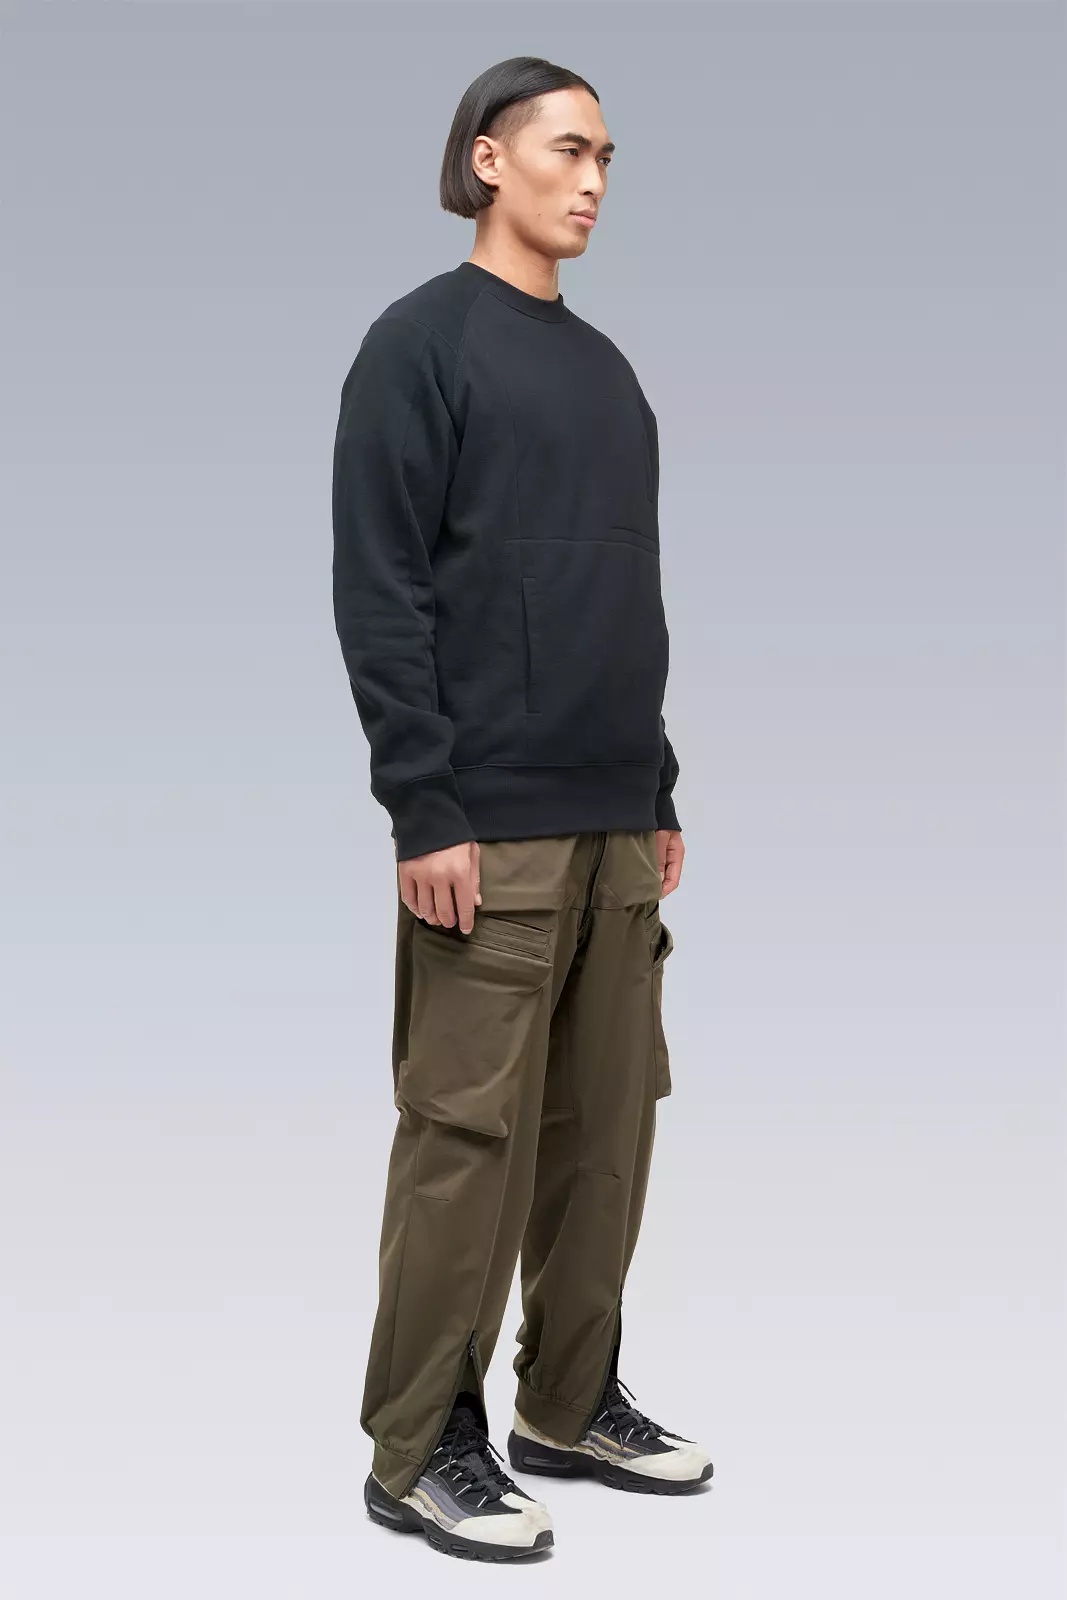 S14-BR Cotton Crewneck Sweatshirt Gray Melange - 14